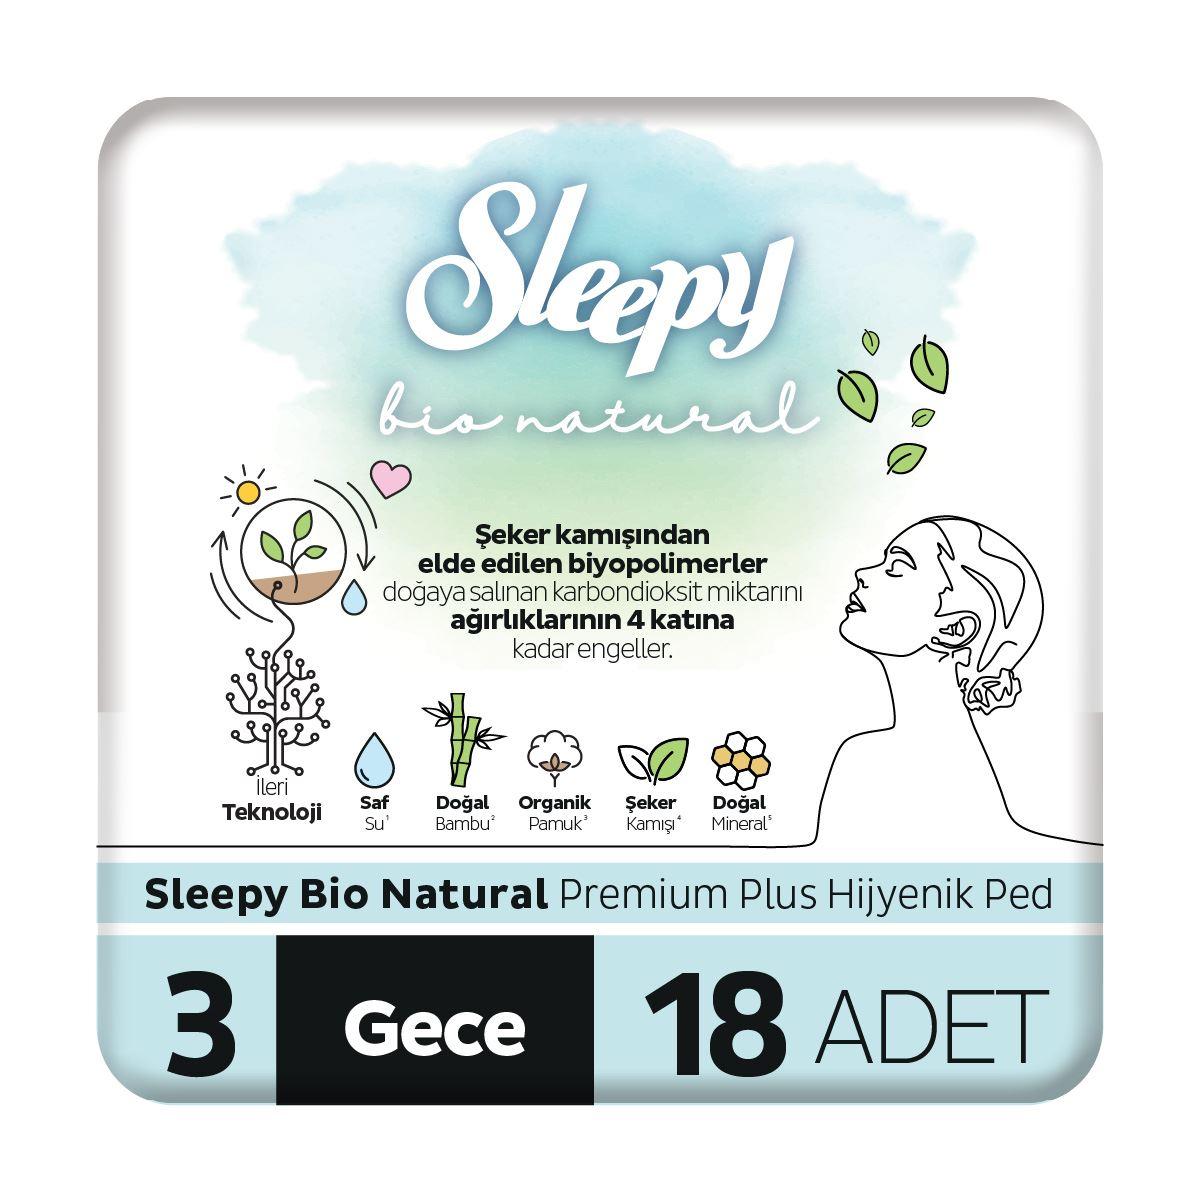 Sleepy Bio Natural Premium Plus Hijyenik Ped Gece 18x2 36 Adet Ped